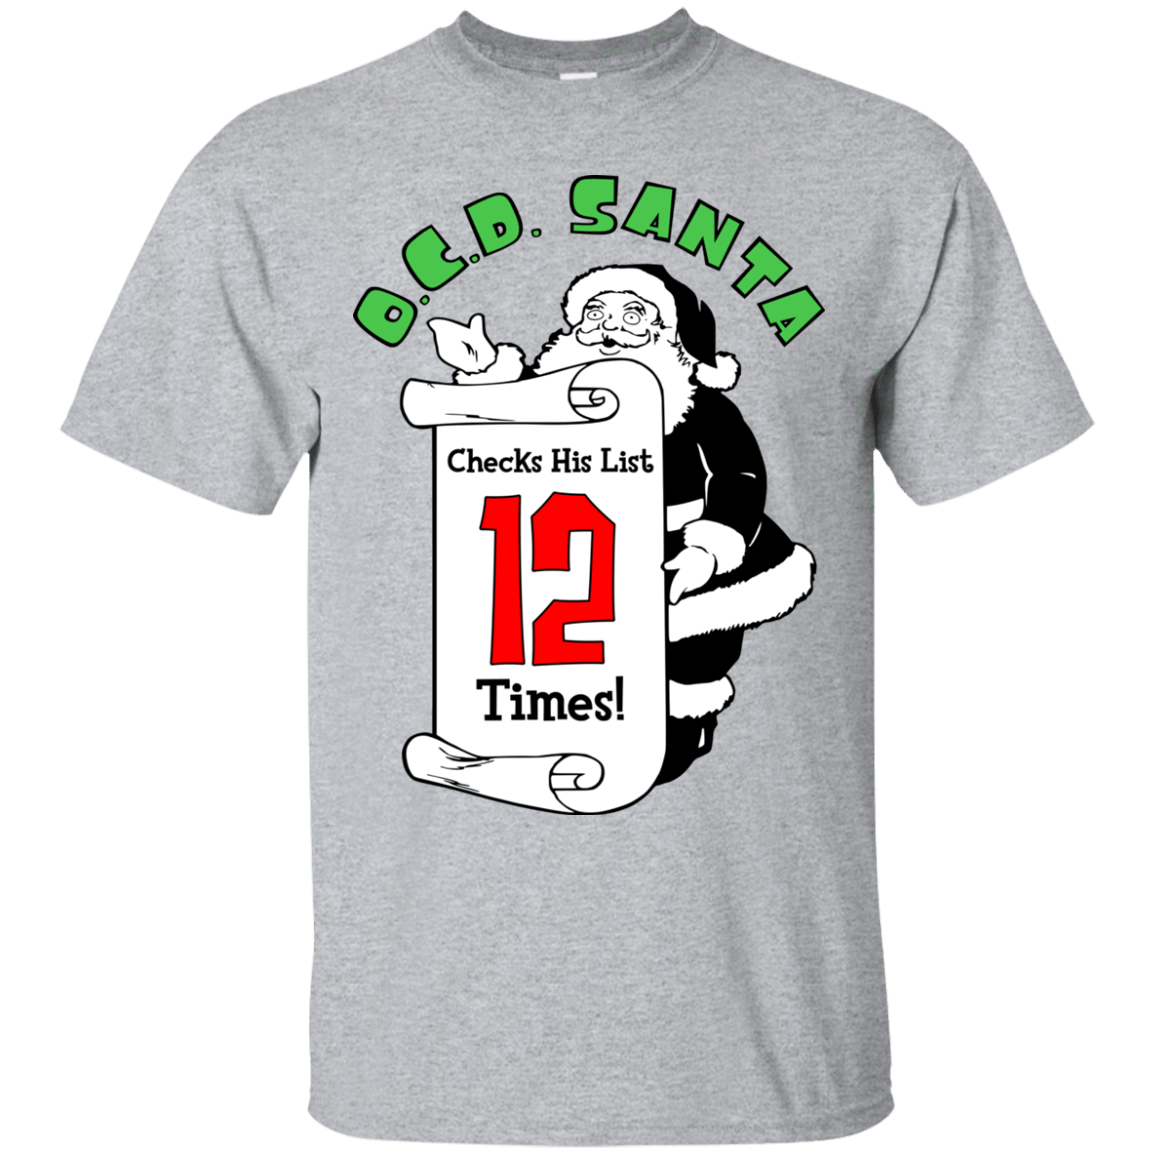 T-Shirts Sport Grey / Small OCD Santa T-Shirt